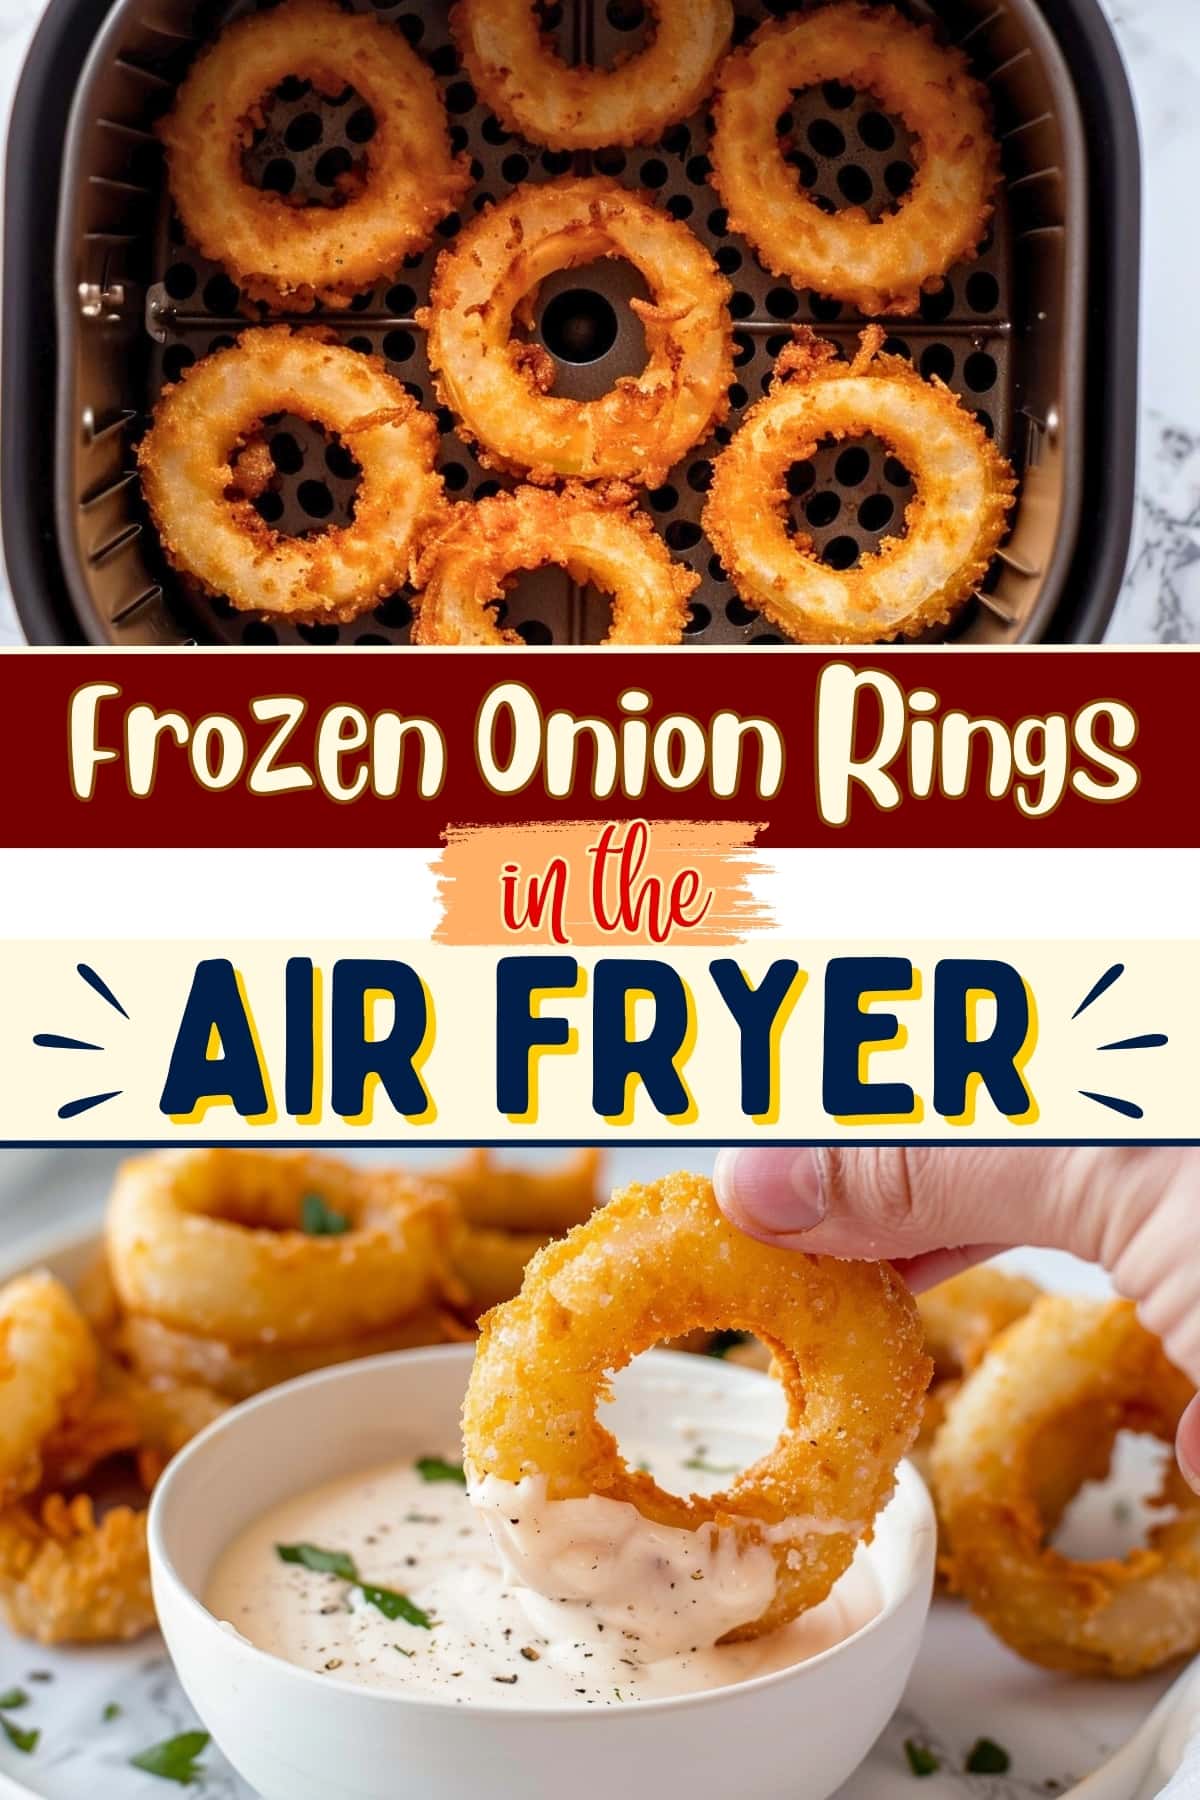 Air fryer onion rings